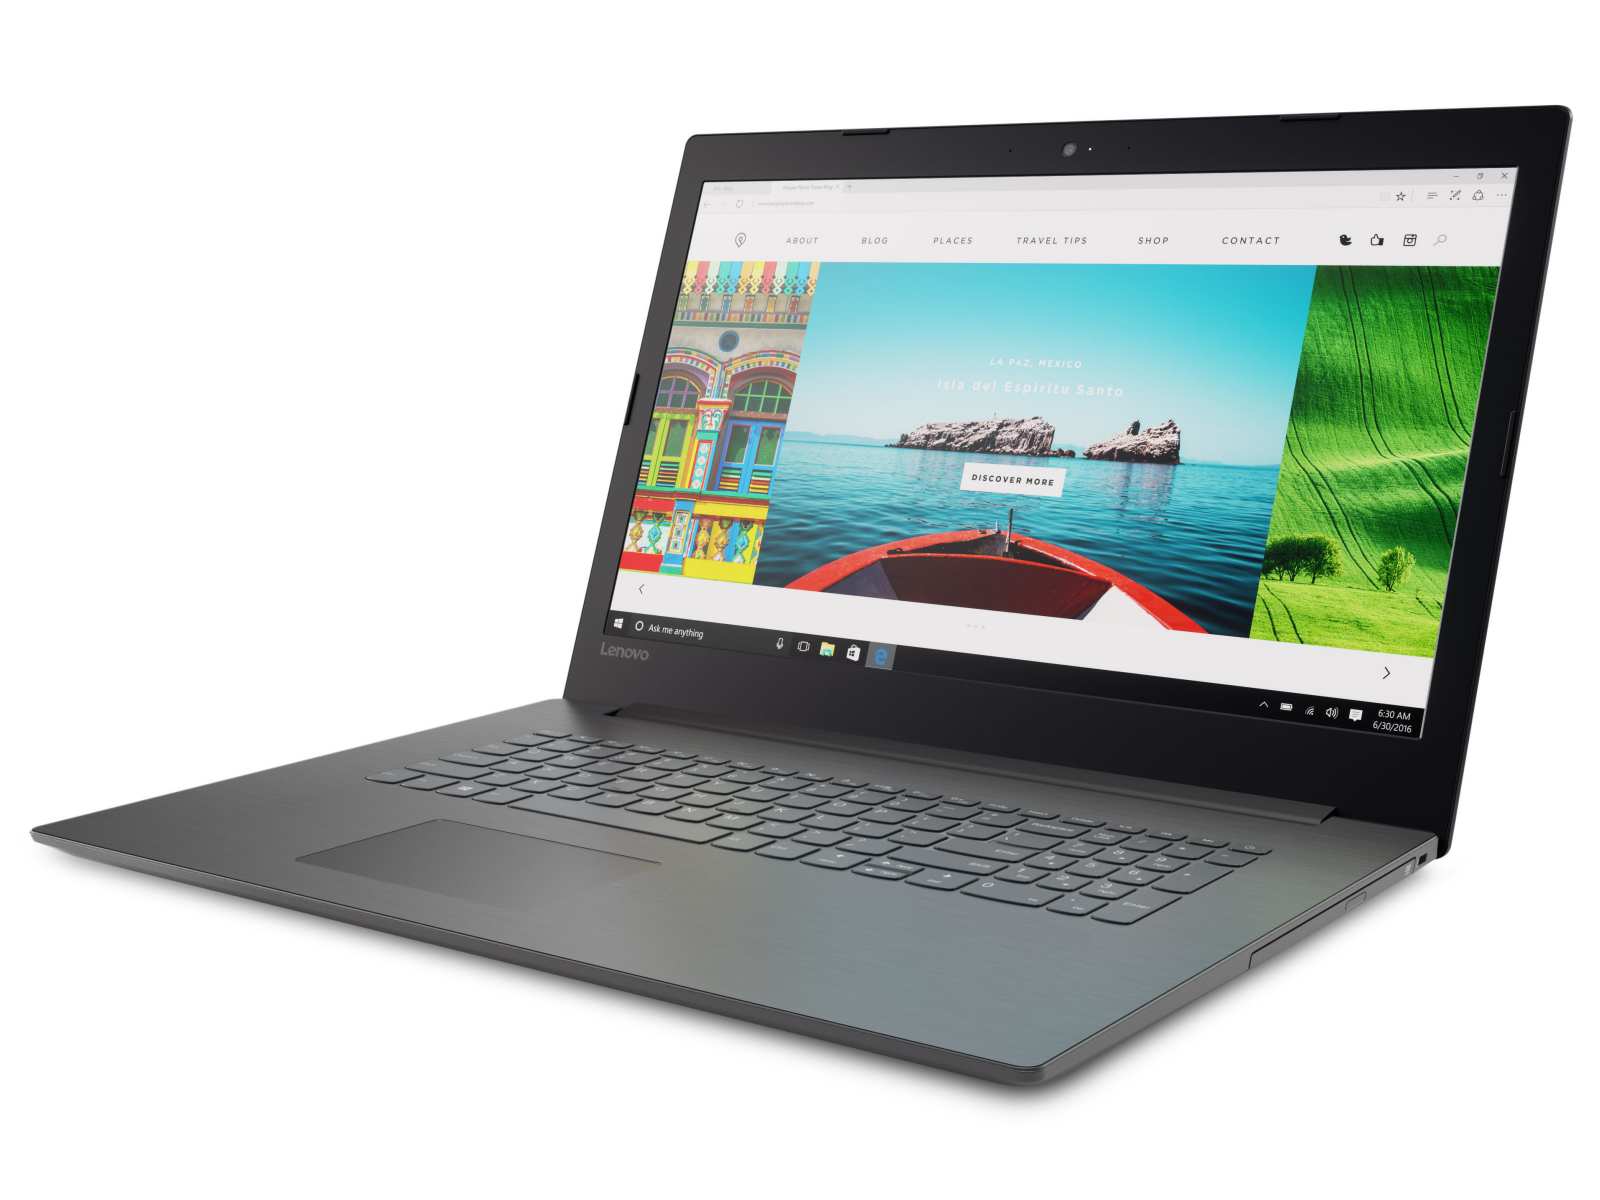 Lenovo Ideapad 330 15igm Celeron N4100 Laptop Review Notebookcheck Net Reviews